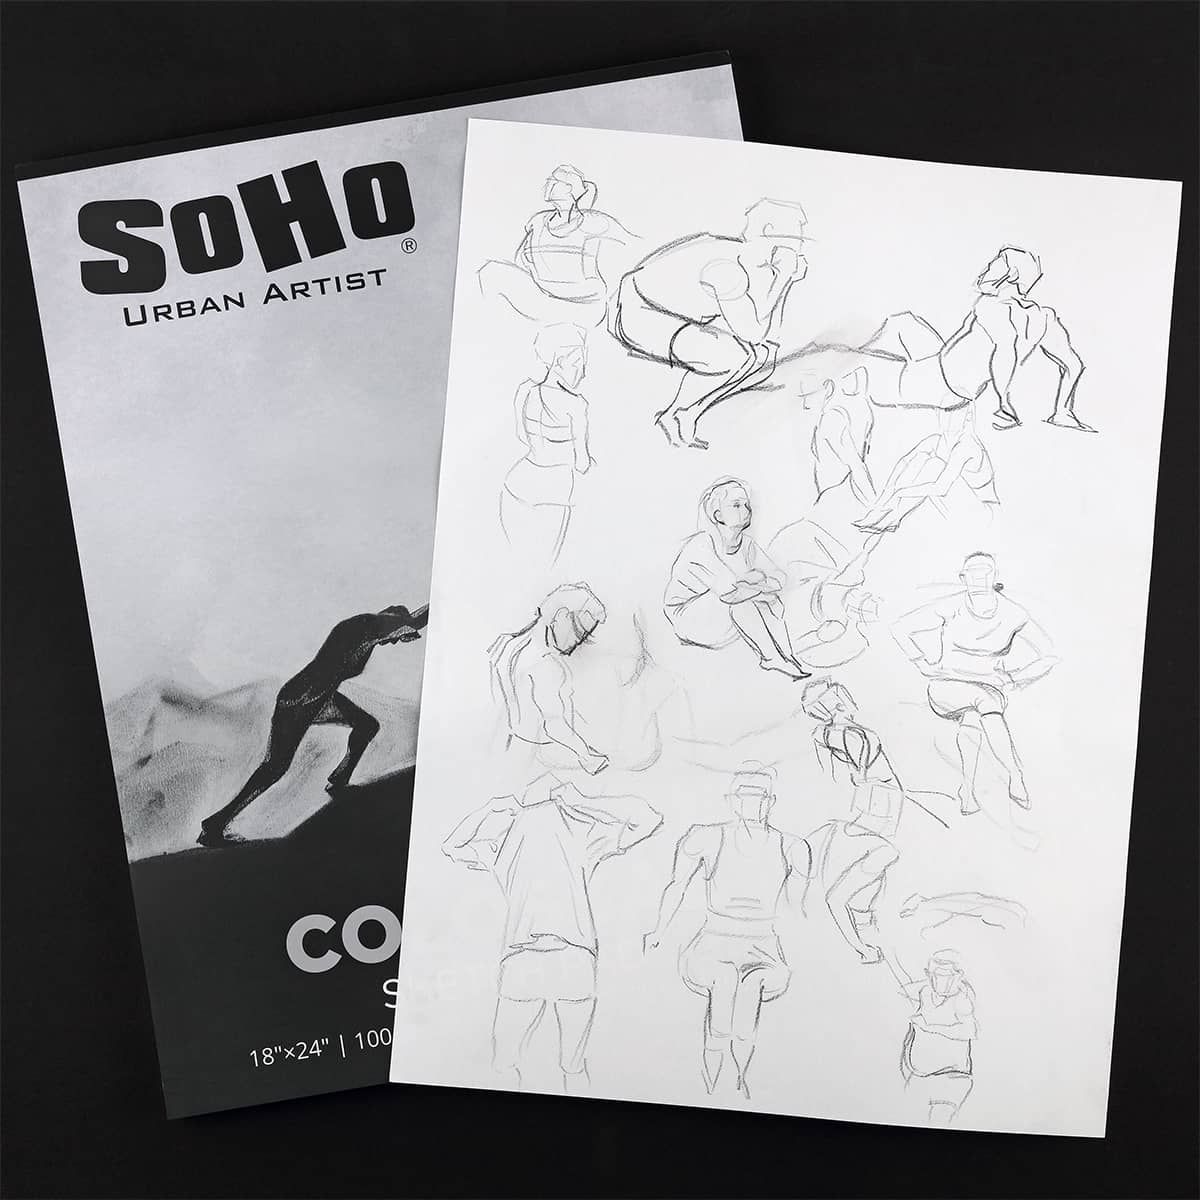 Soho Colossal Sketch Pads